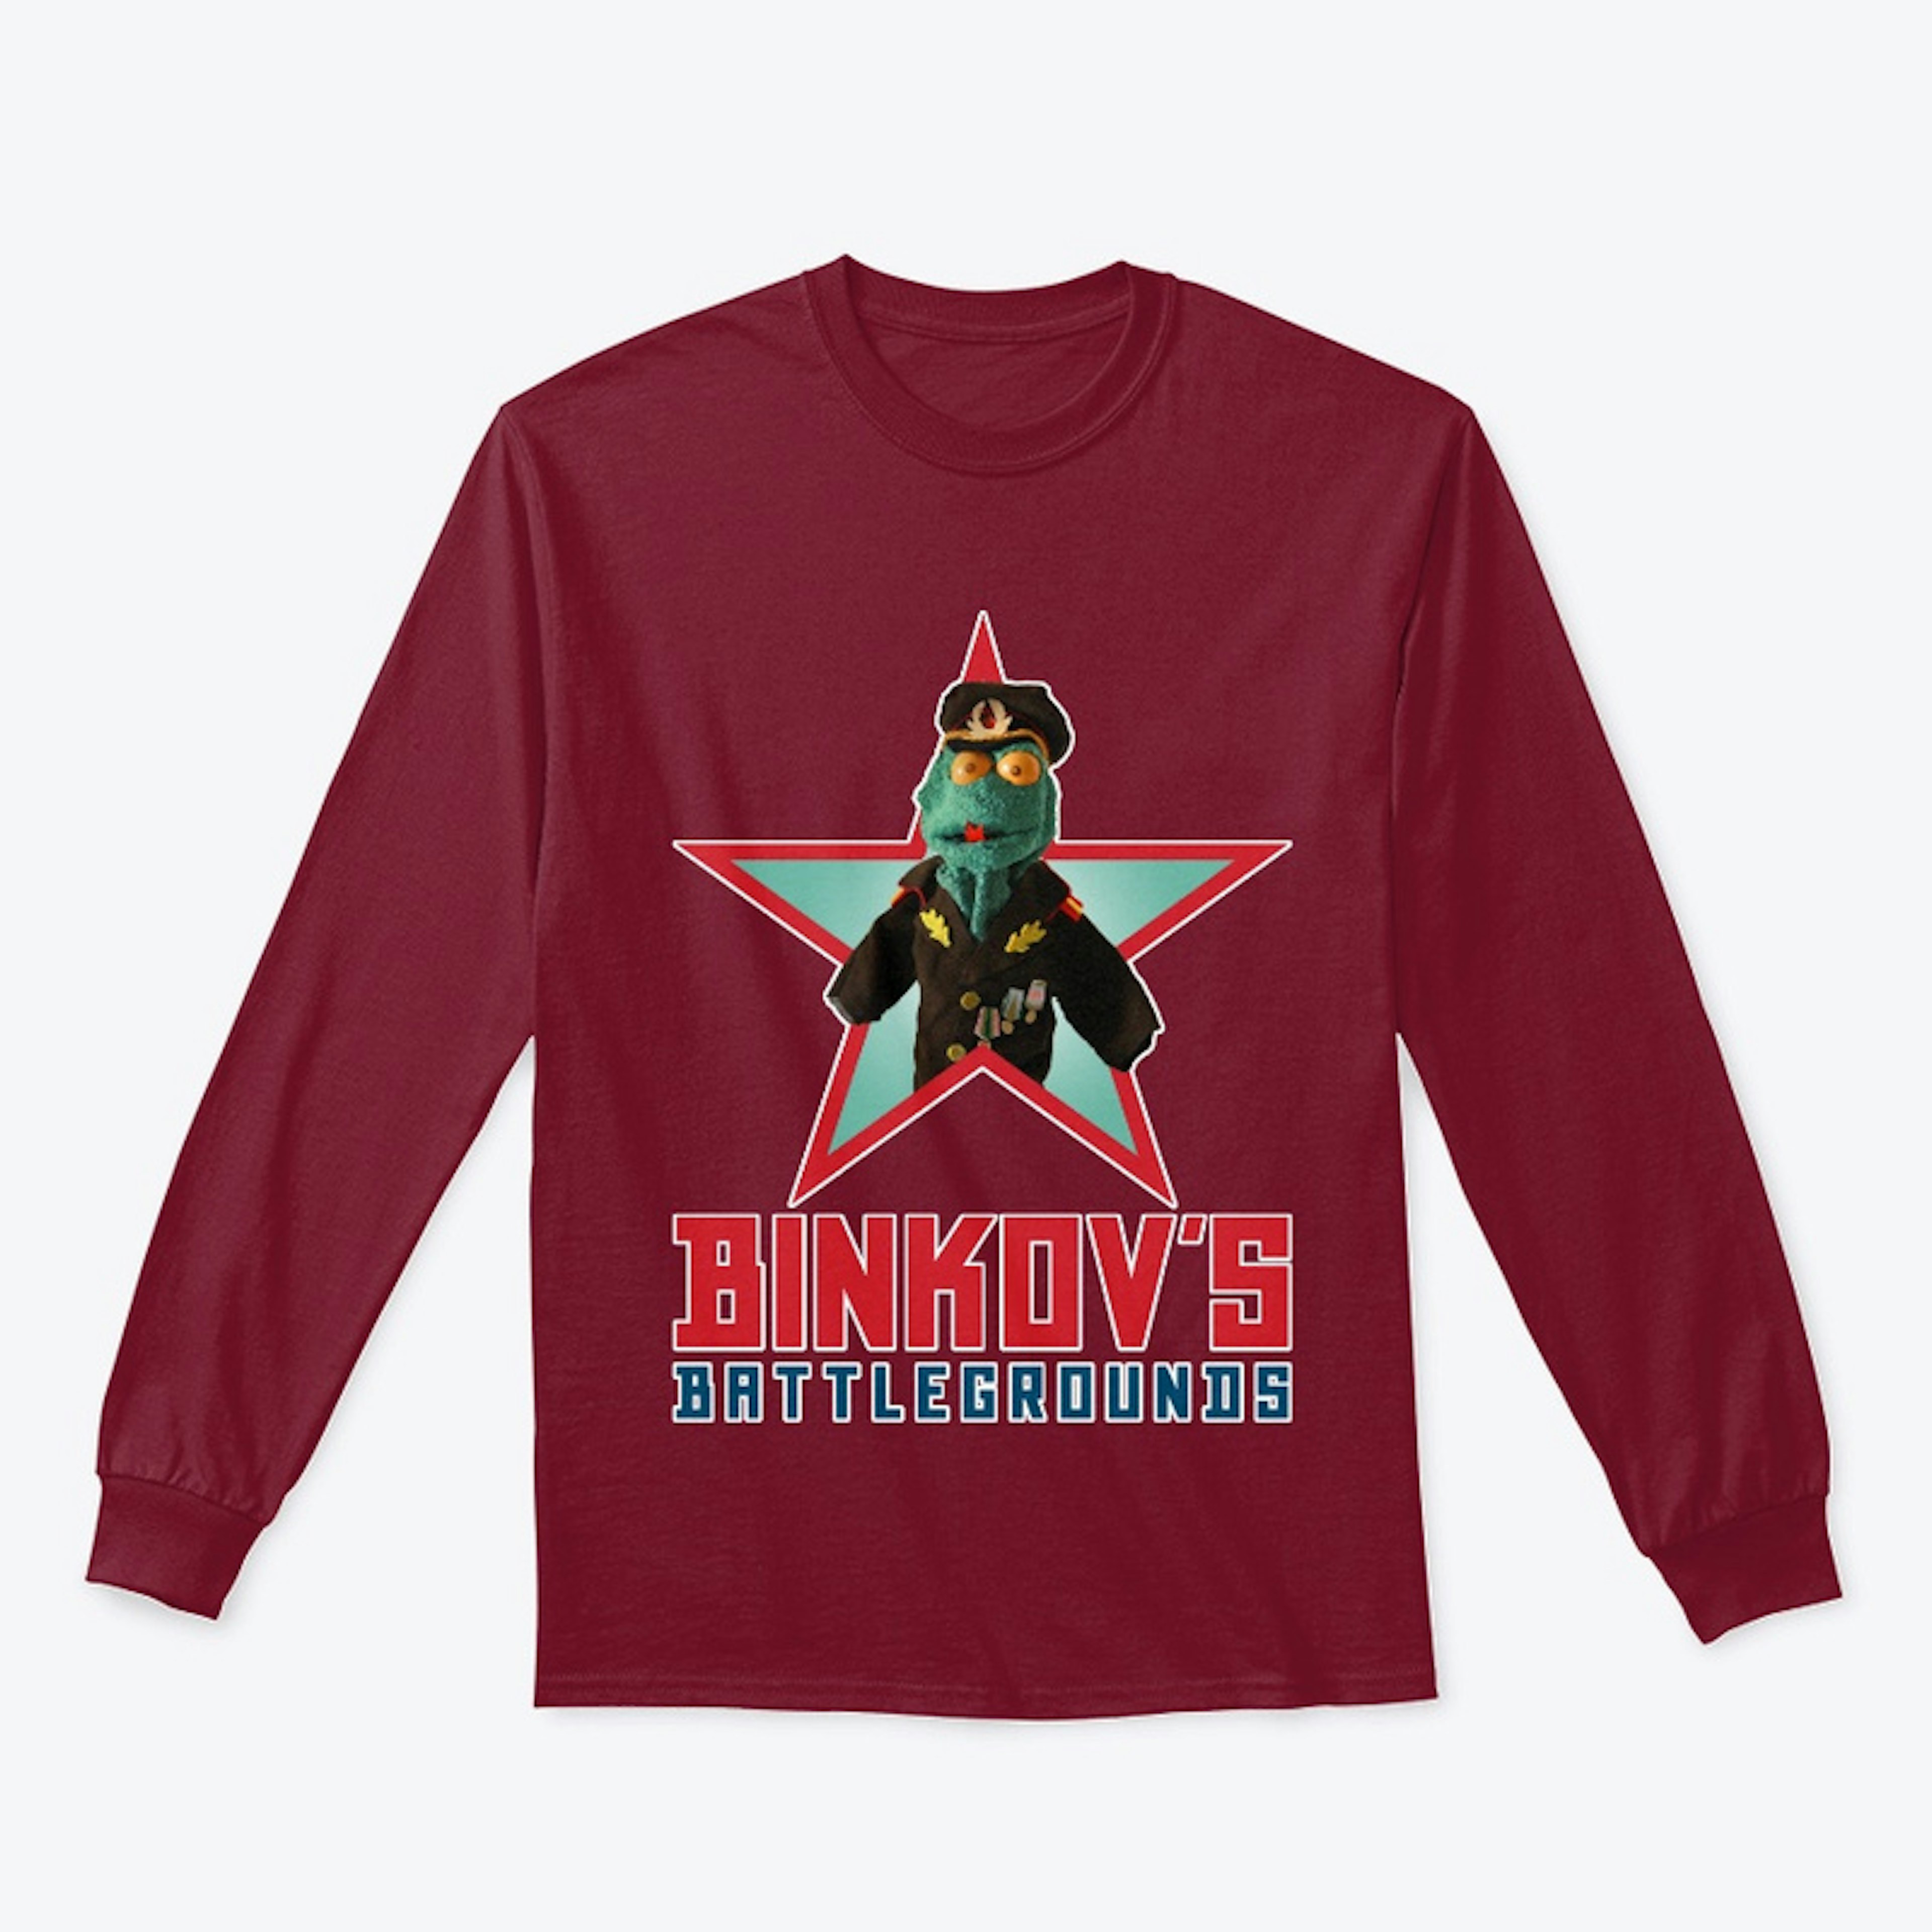 Binkov is a star!